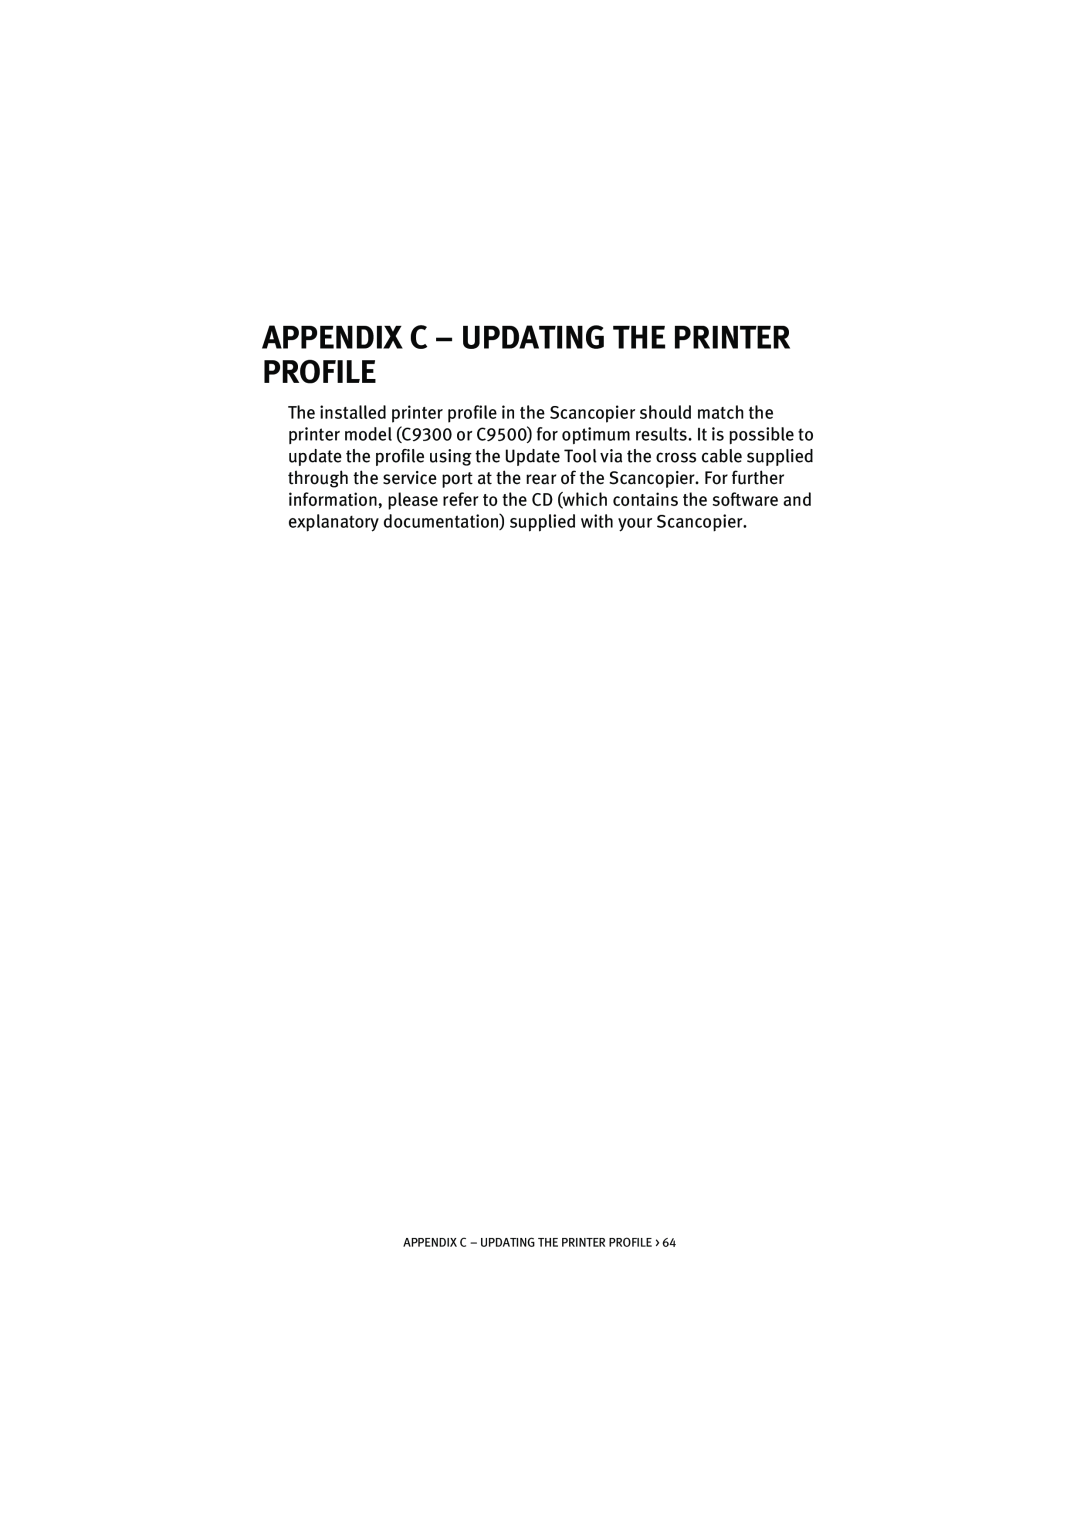 Oki S900 manual Appendix C - Updating The Printer Profile 